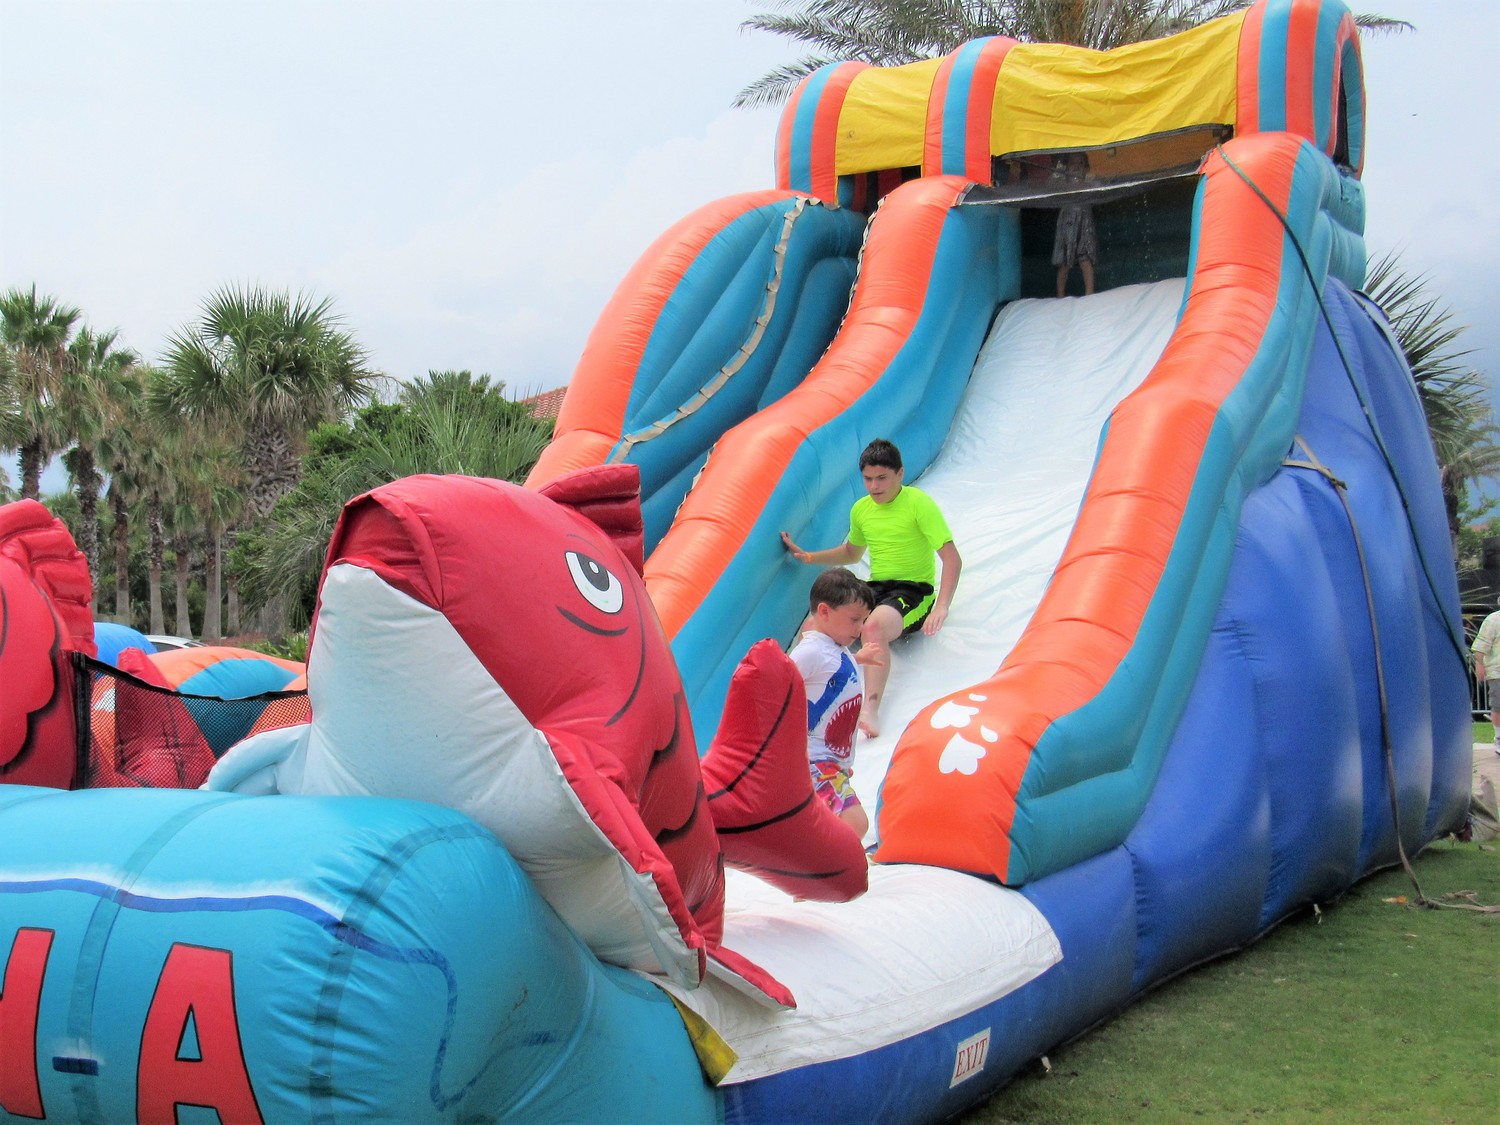 Two boys slide down a water slide in the festival's Kids' Zone.